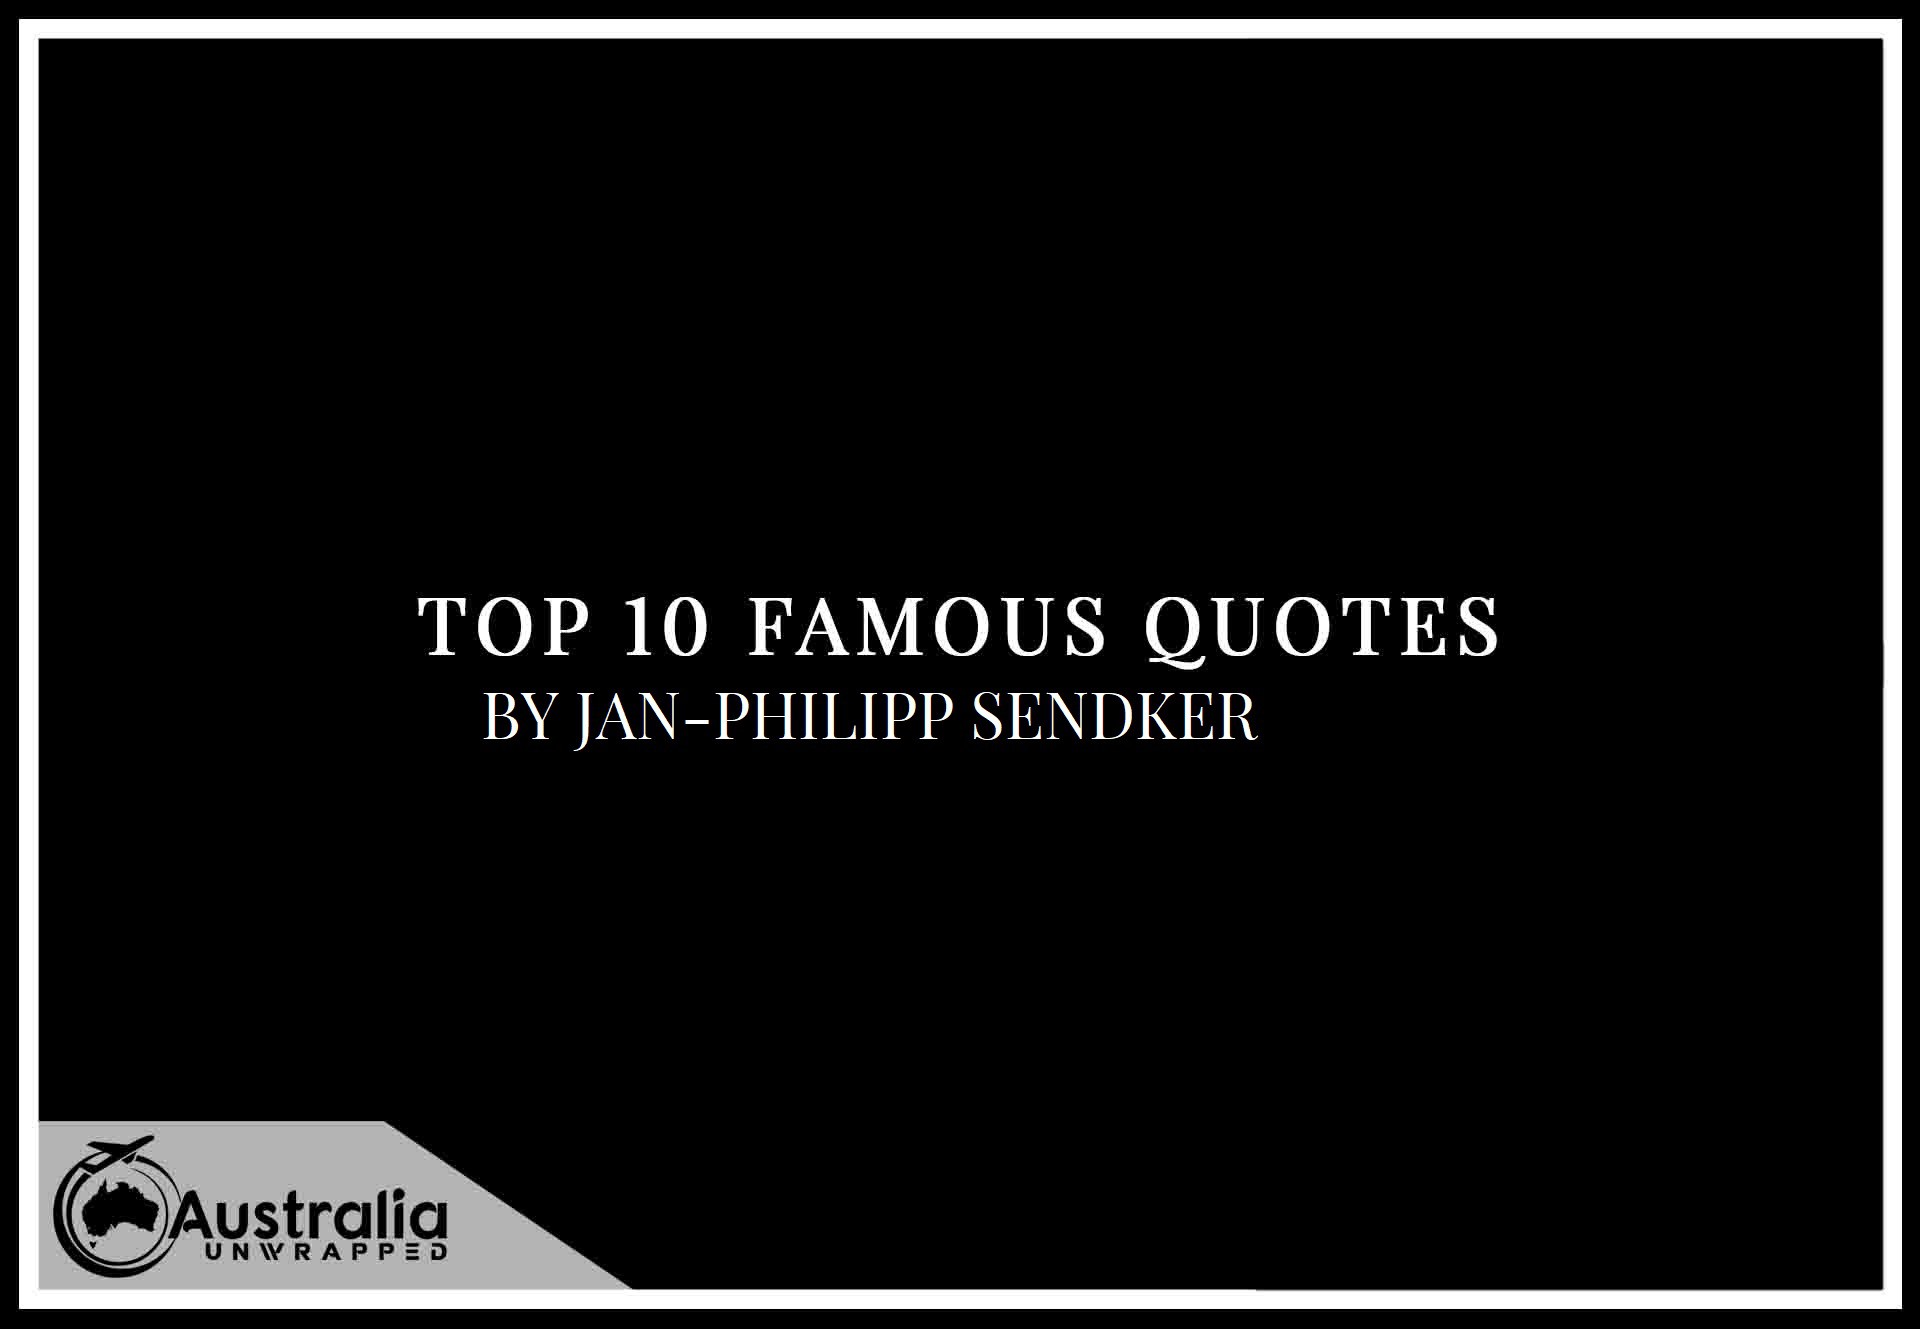 Top 10 Famous Quotes by Author Jan-Philipp Sendker